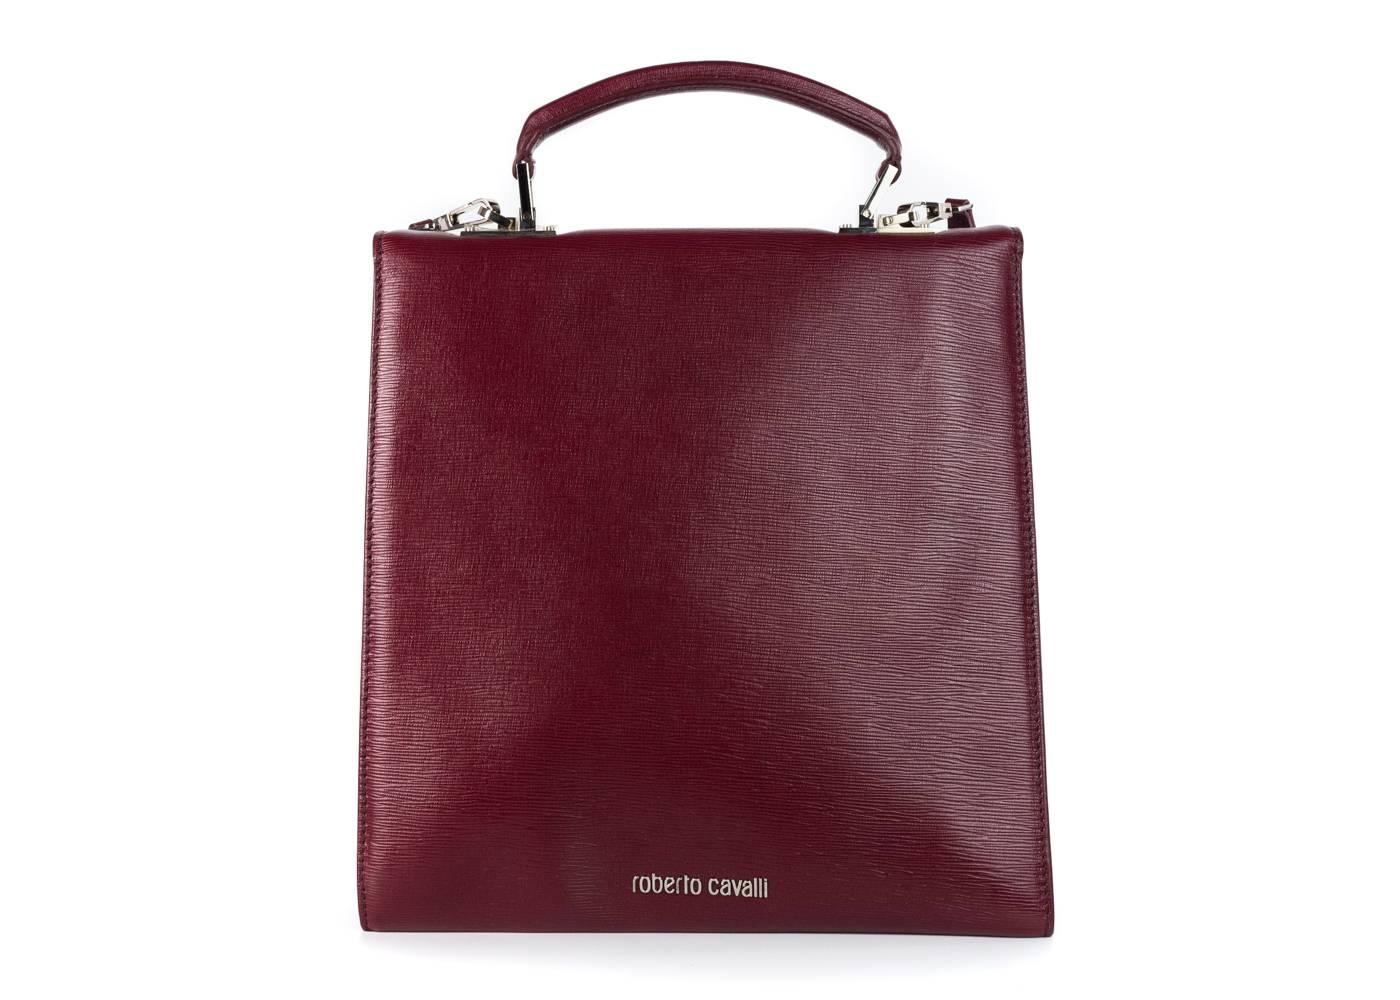 red leather satchel handbags